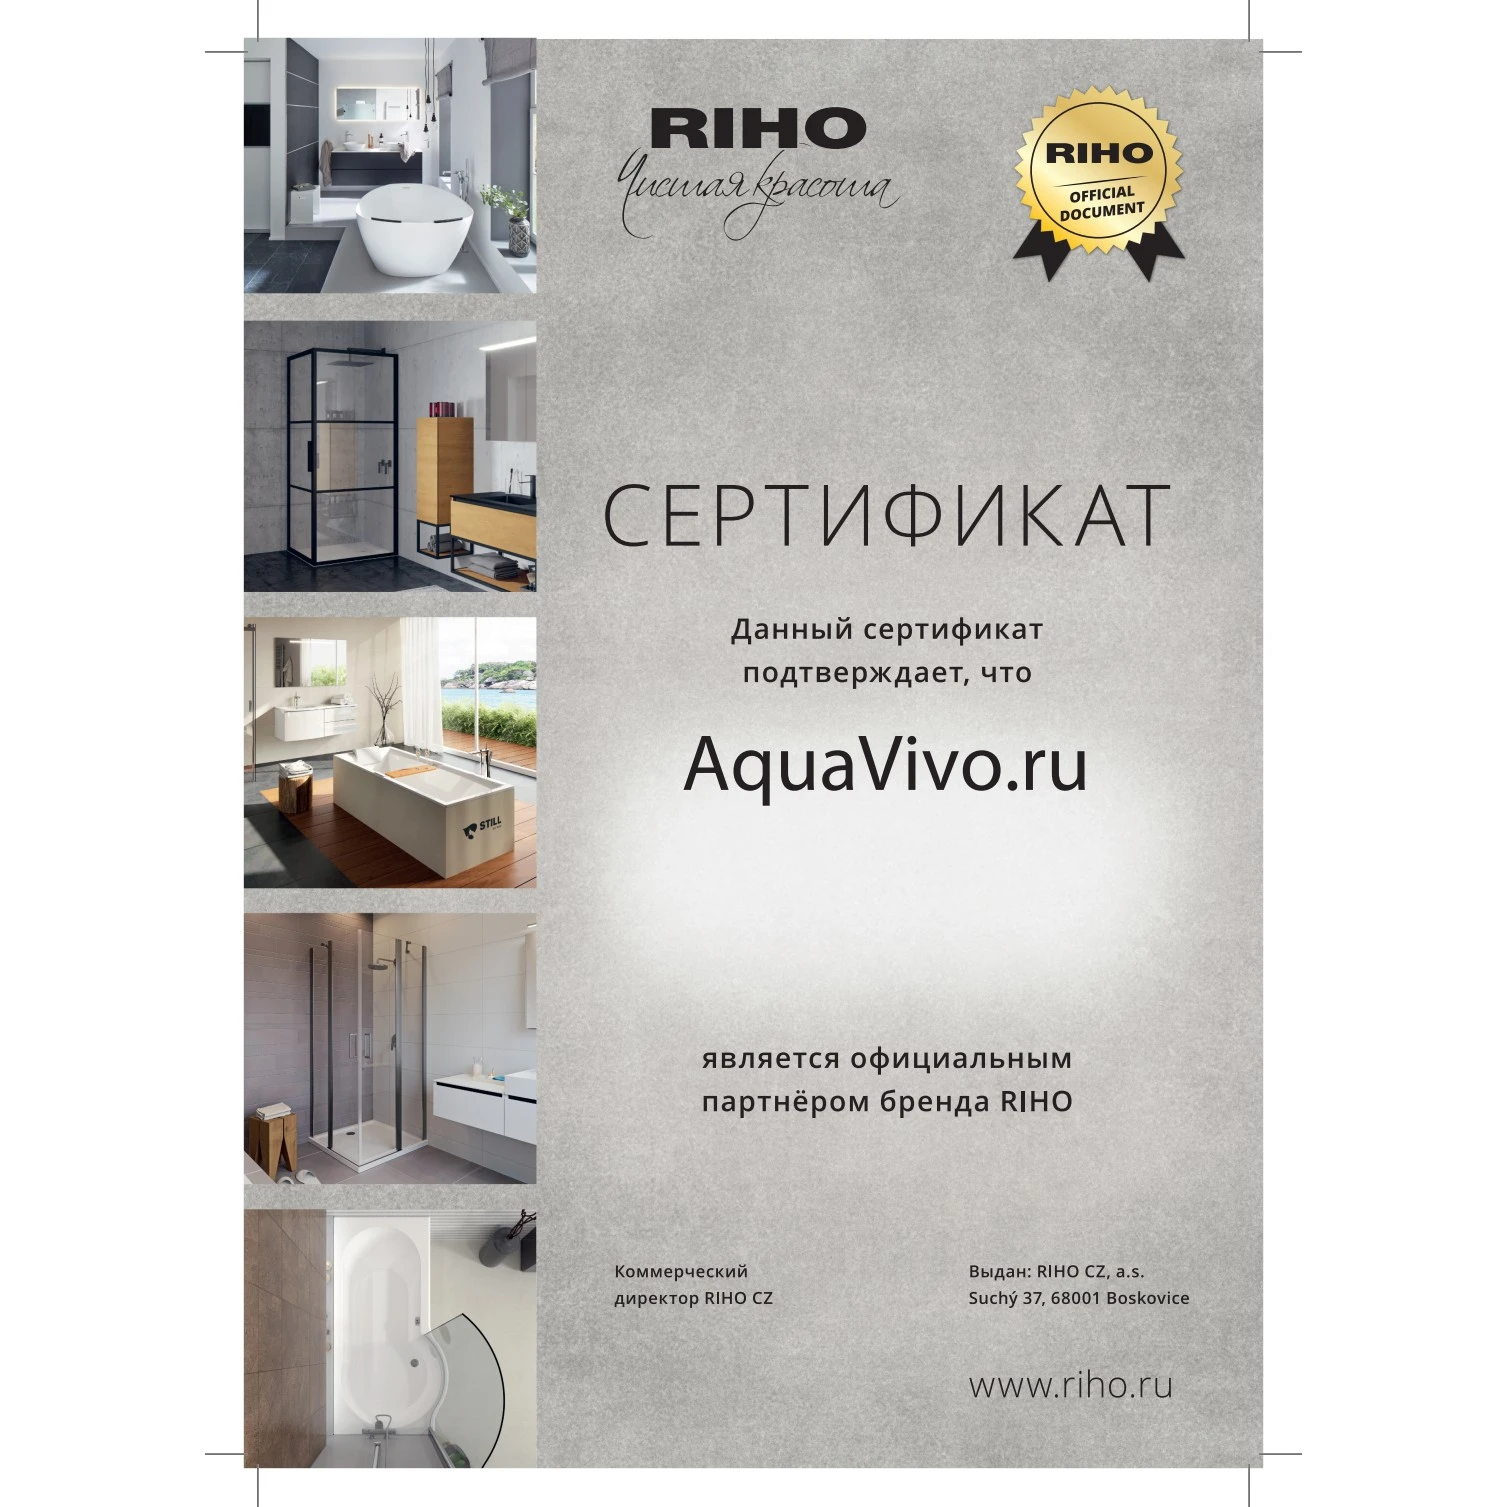 Шторка на ванну Riho Vz Alta 100x140, стекло прозрачное, профиль хром - фото 1